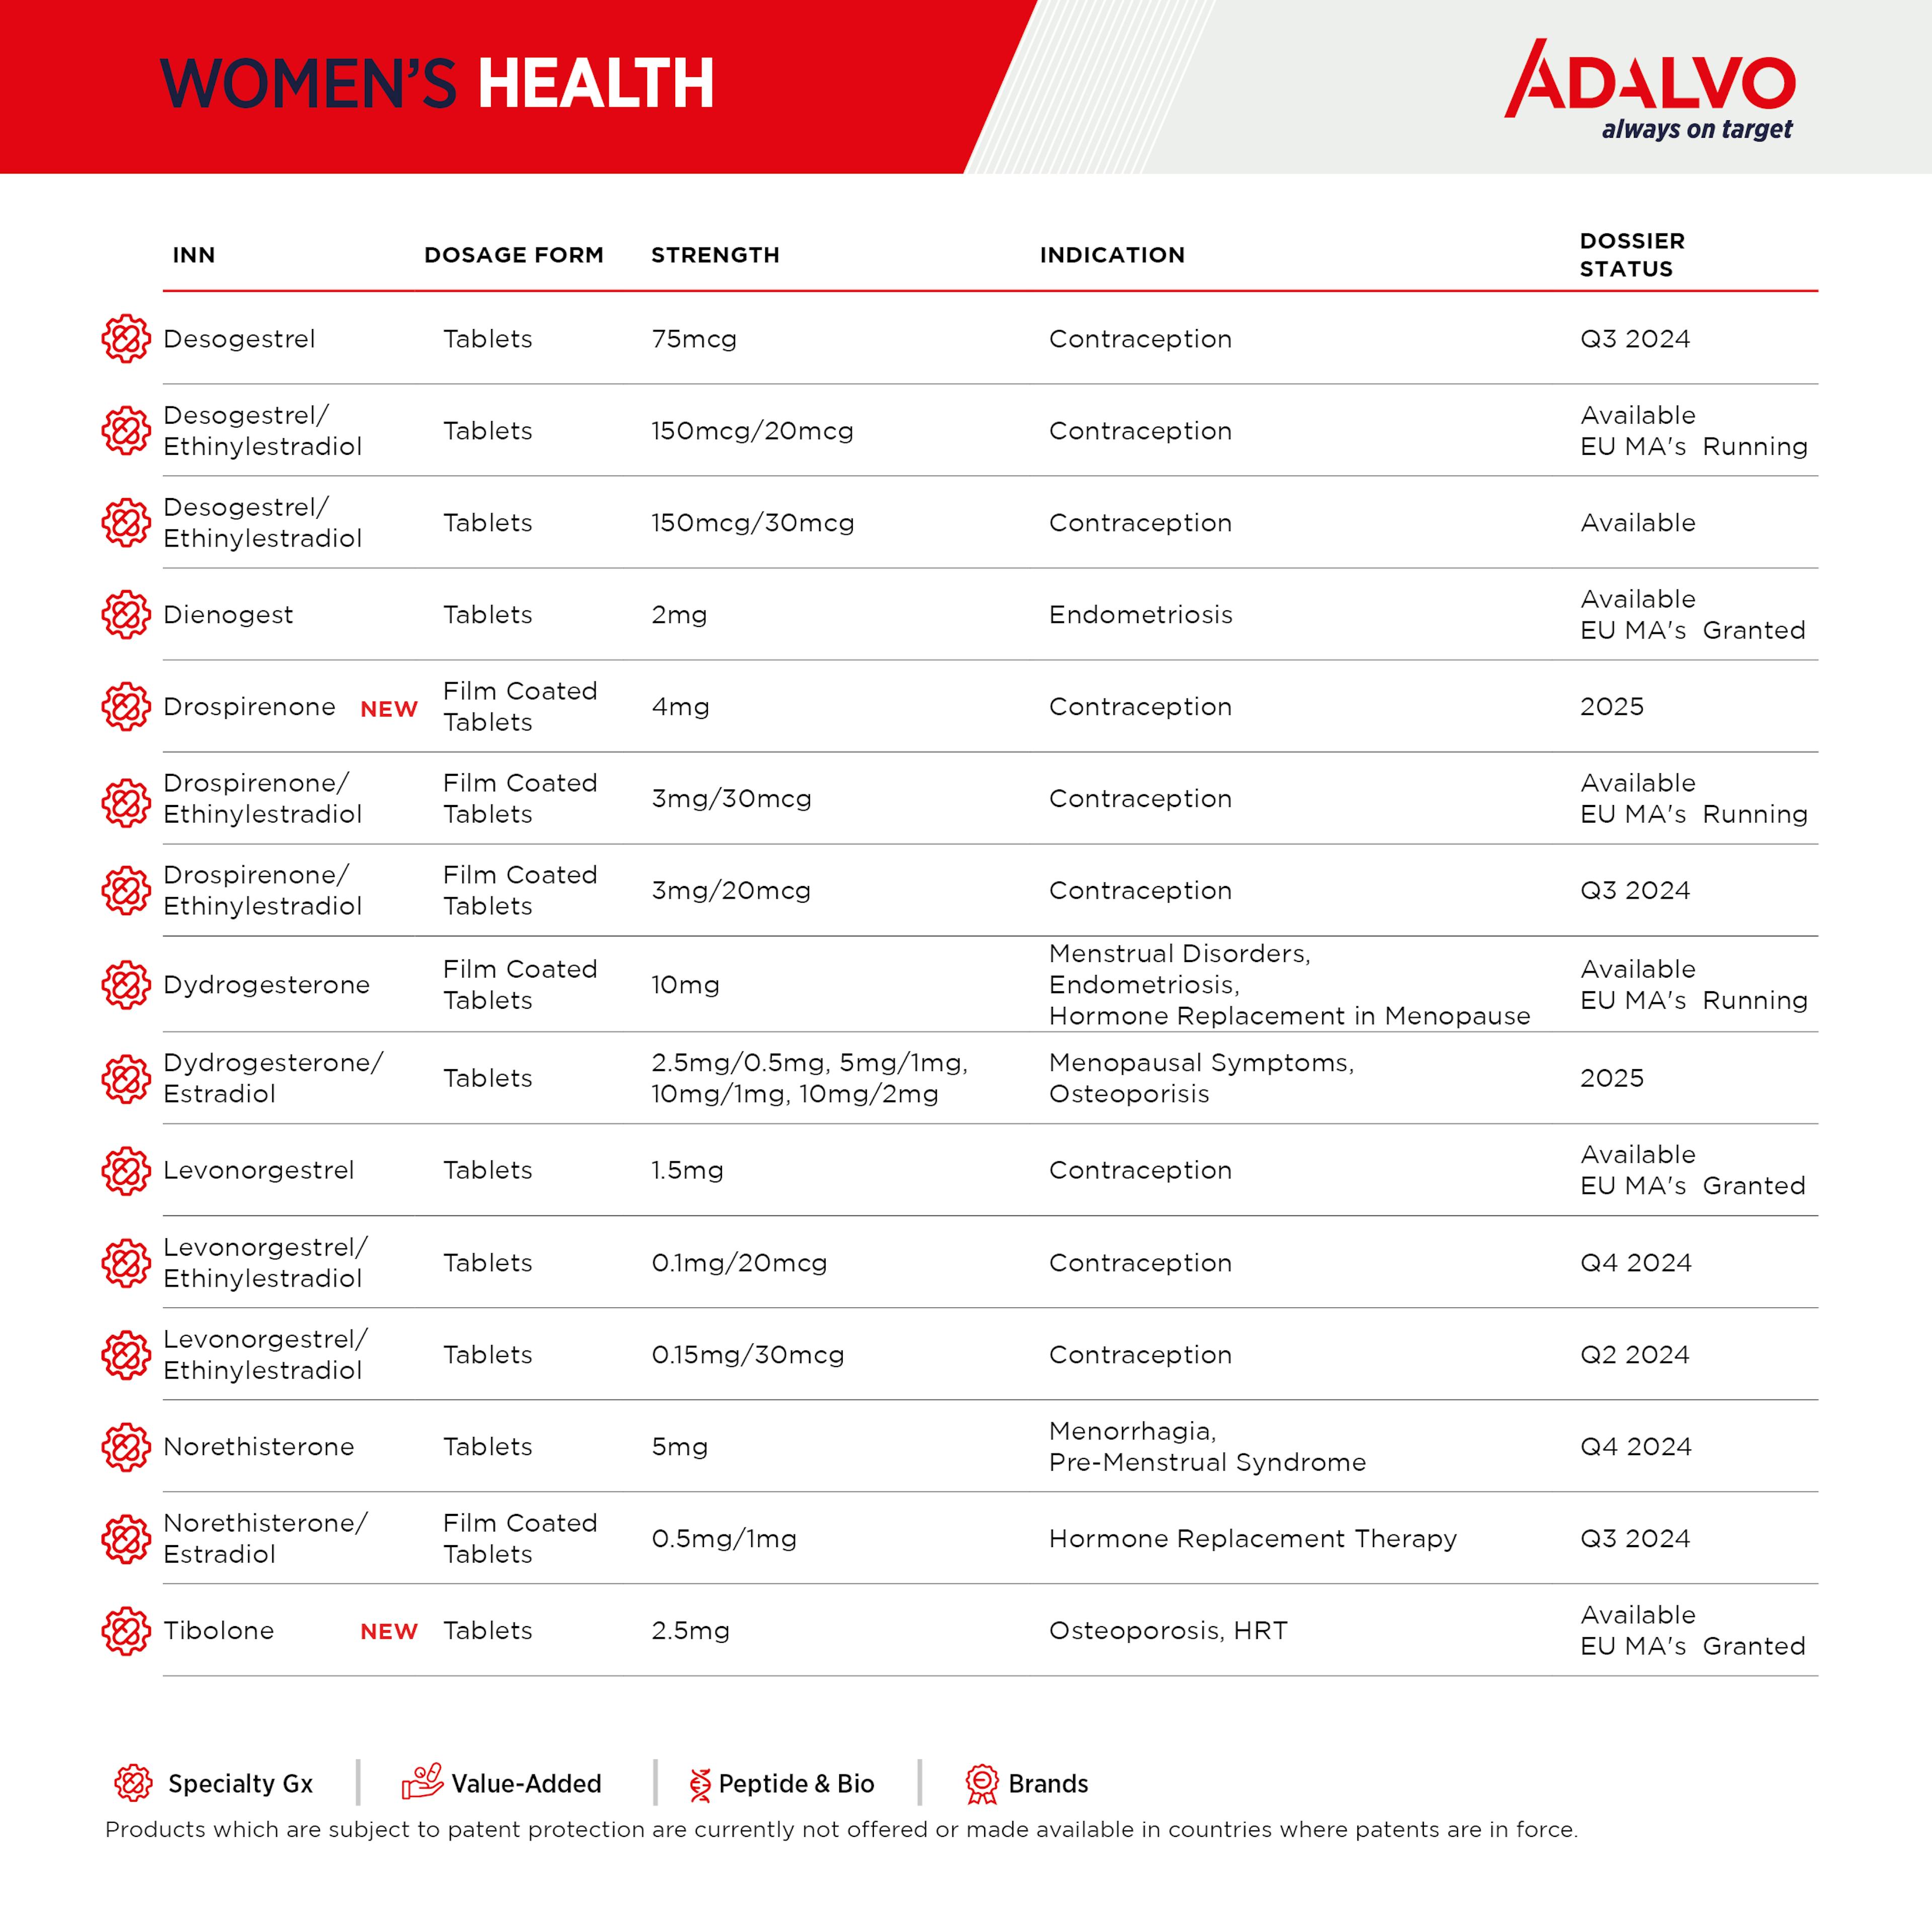 Adalvo's Women's Health Dossiers